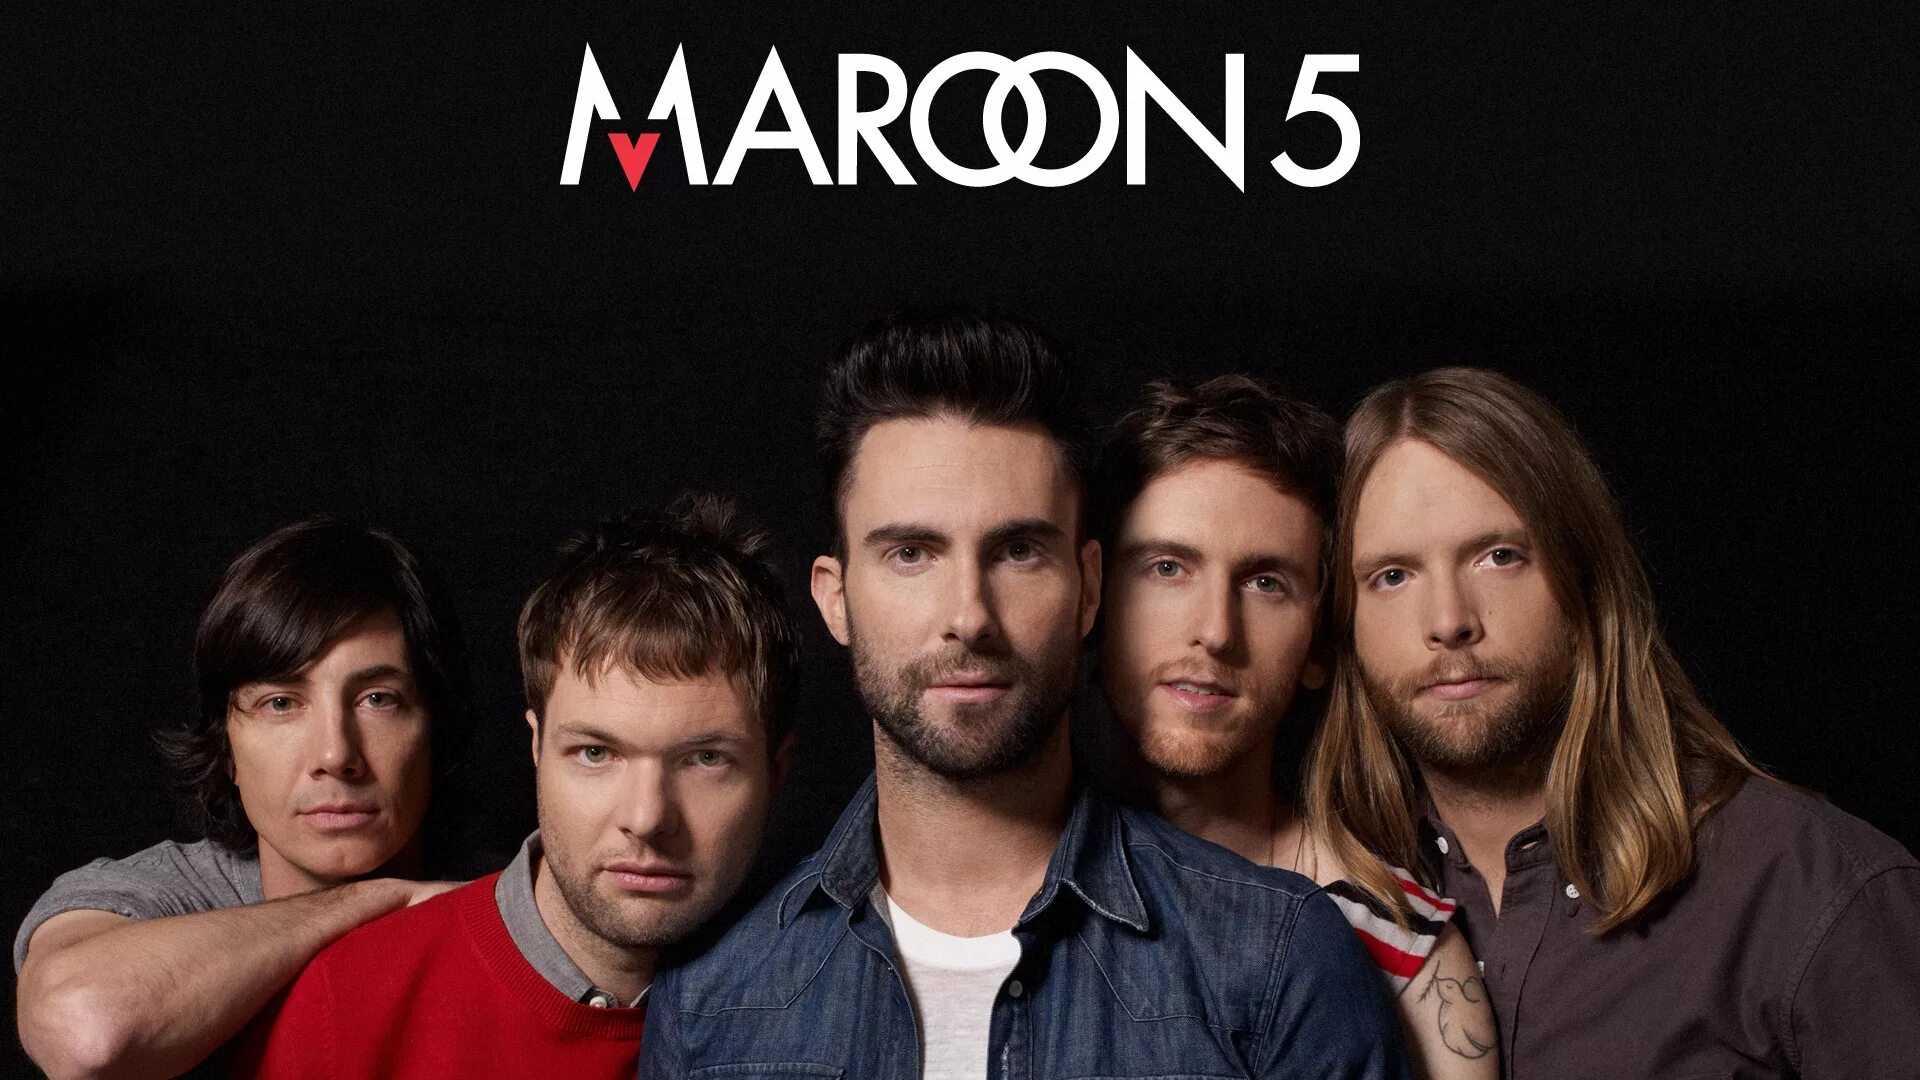 Марон 5 песни. Maroon 5. Марун 5. Марун 5 участники. Плакат Maroon 5.